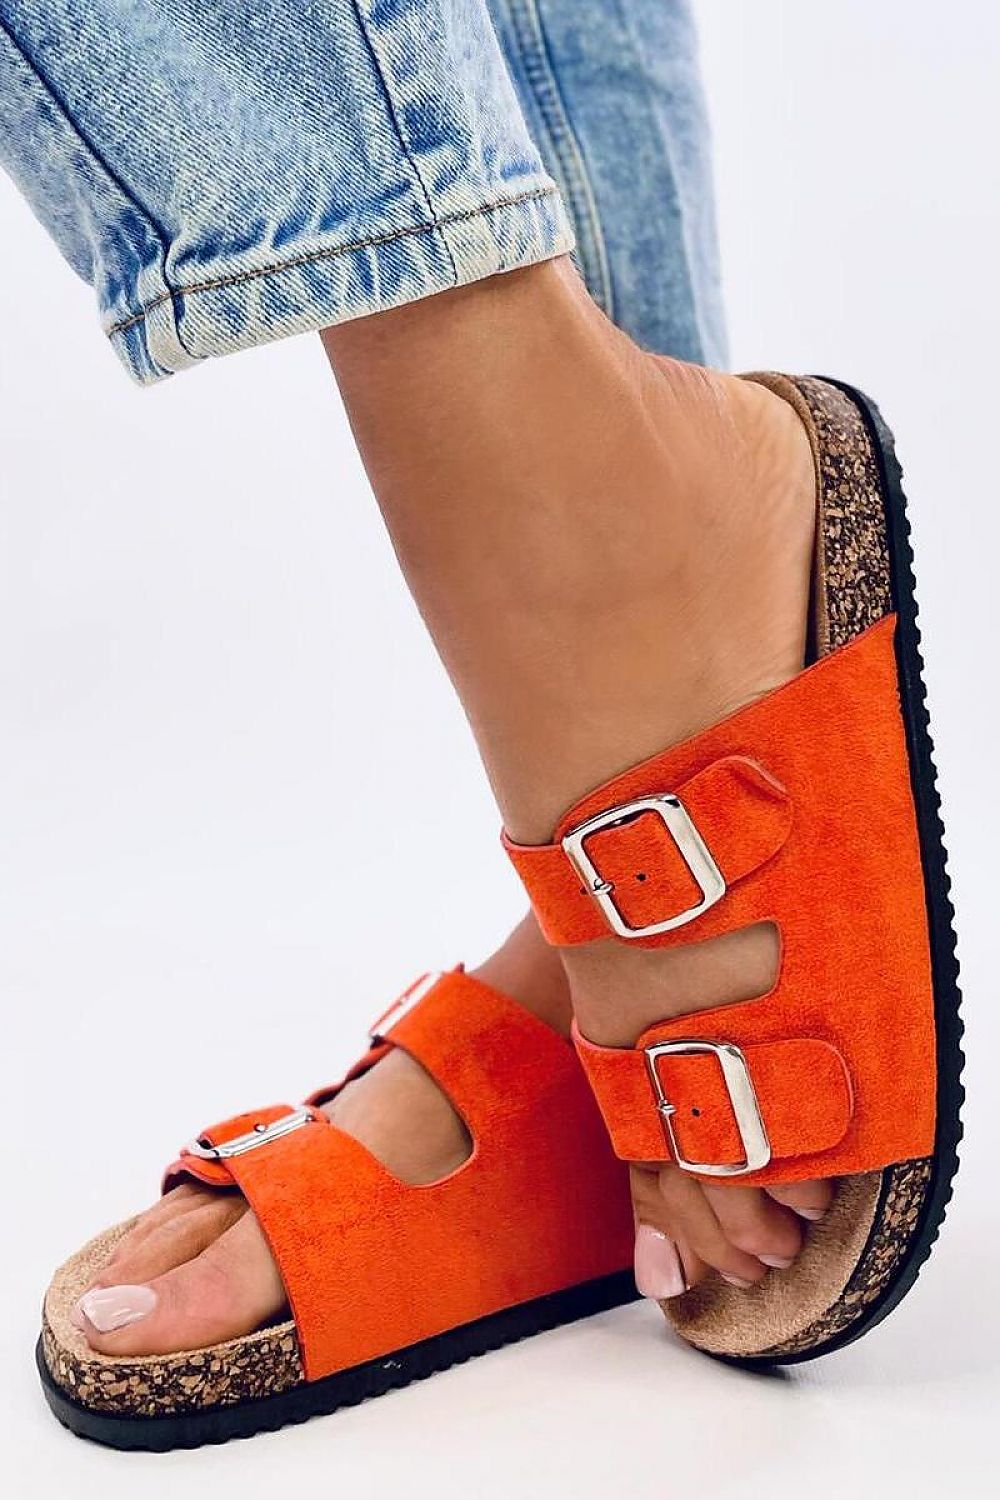 TEEK - Orange Double Buckle Cork Sole Sandals SHOES TEEK MH 5.5  